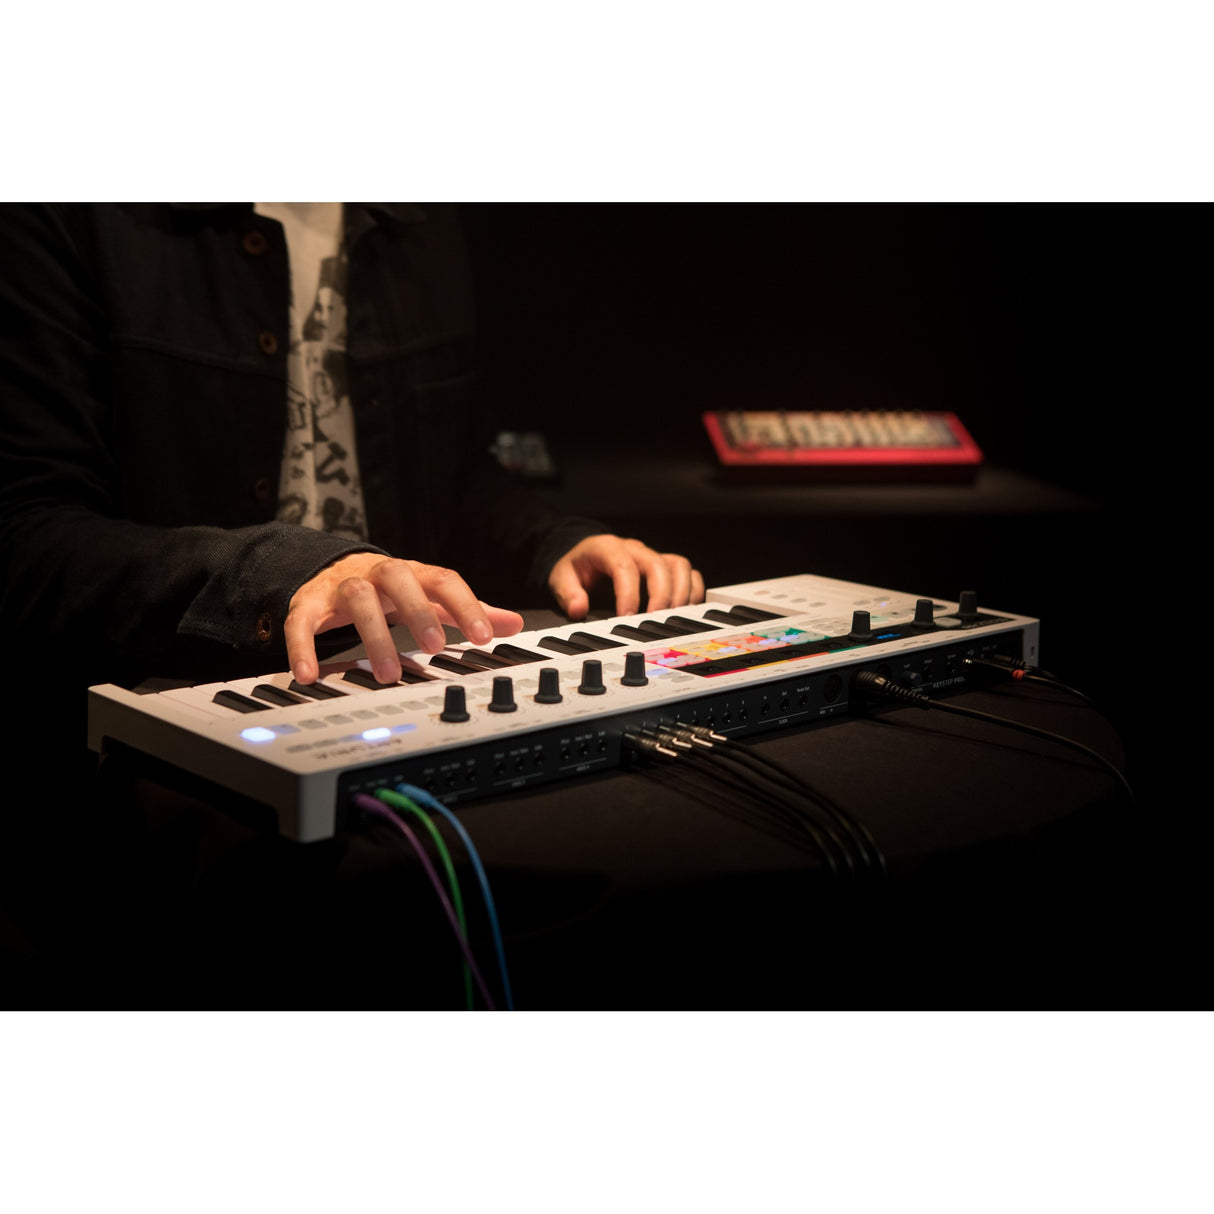 Arturia KEYSTEP PRO 37-Keys Portable MIDI Controller